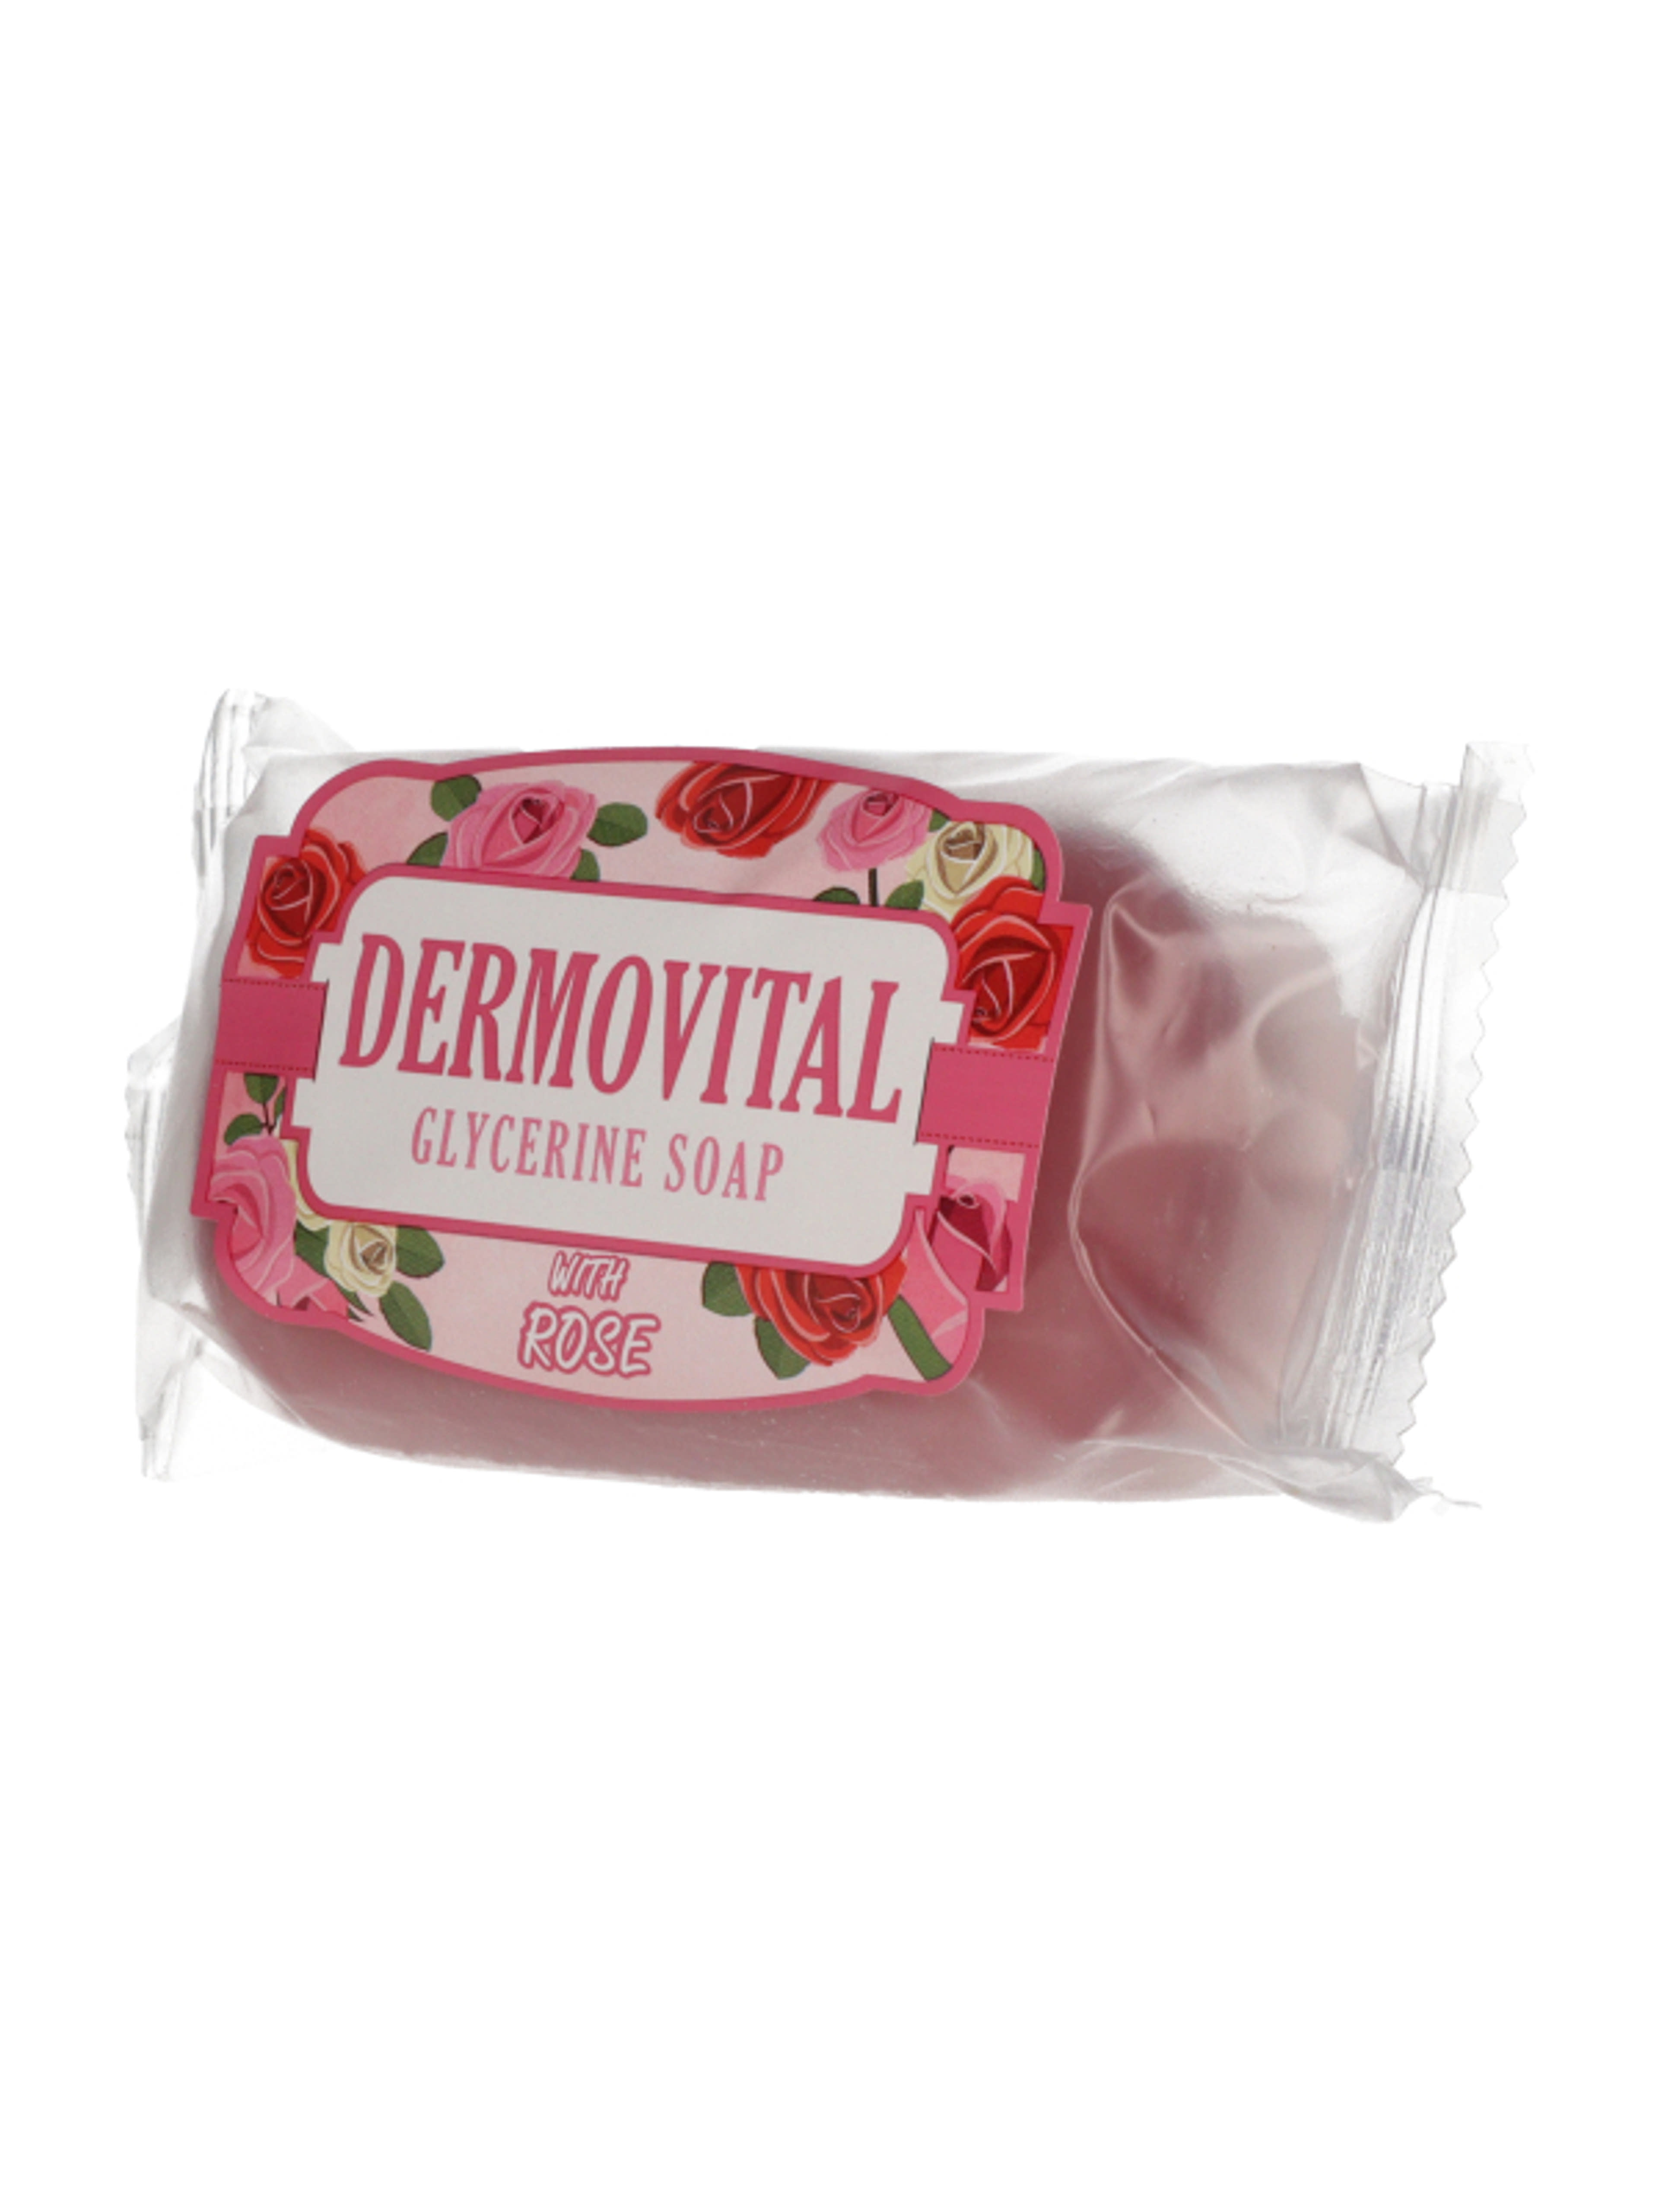 Dermovital Rose glicerines szappan - 100 g-3